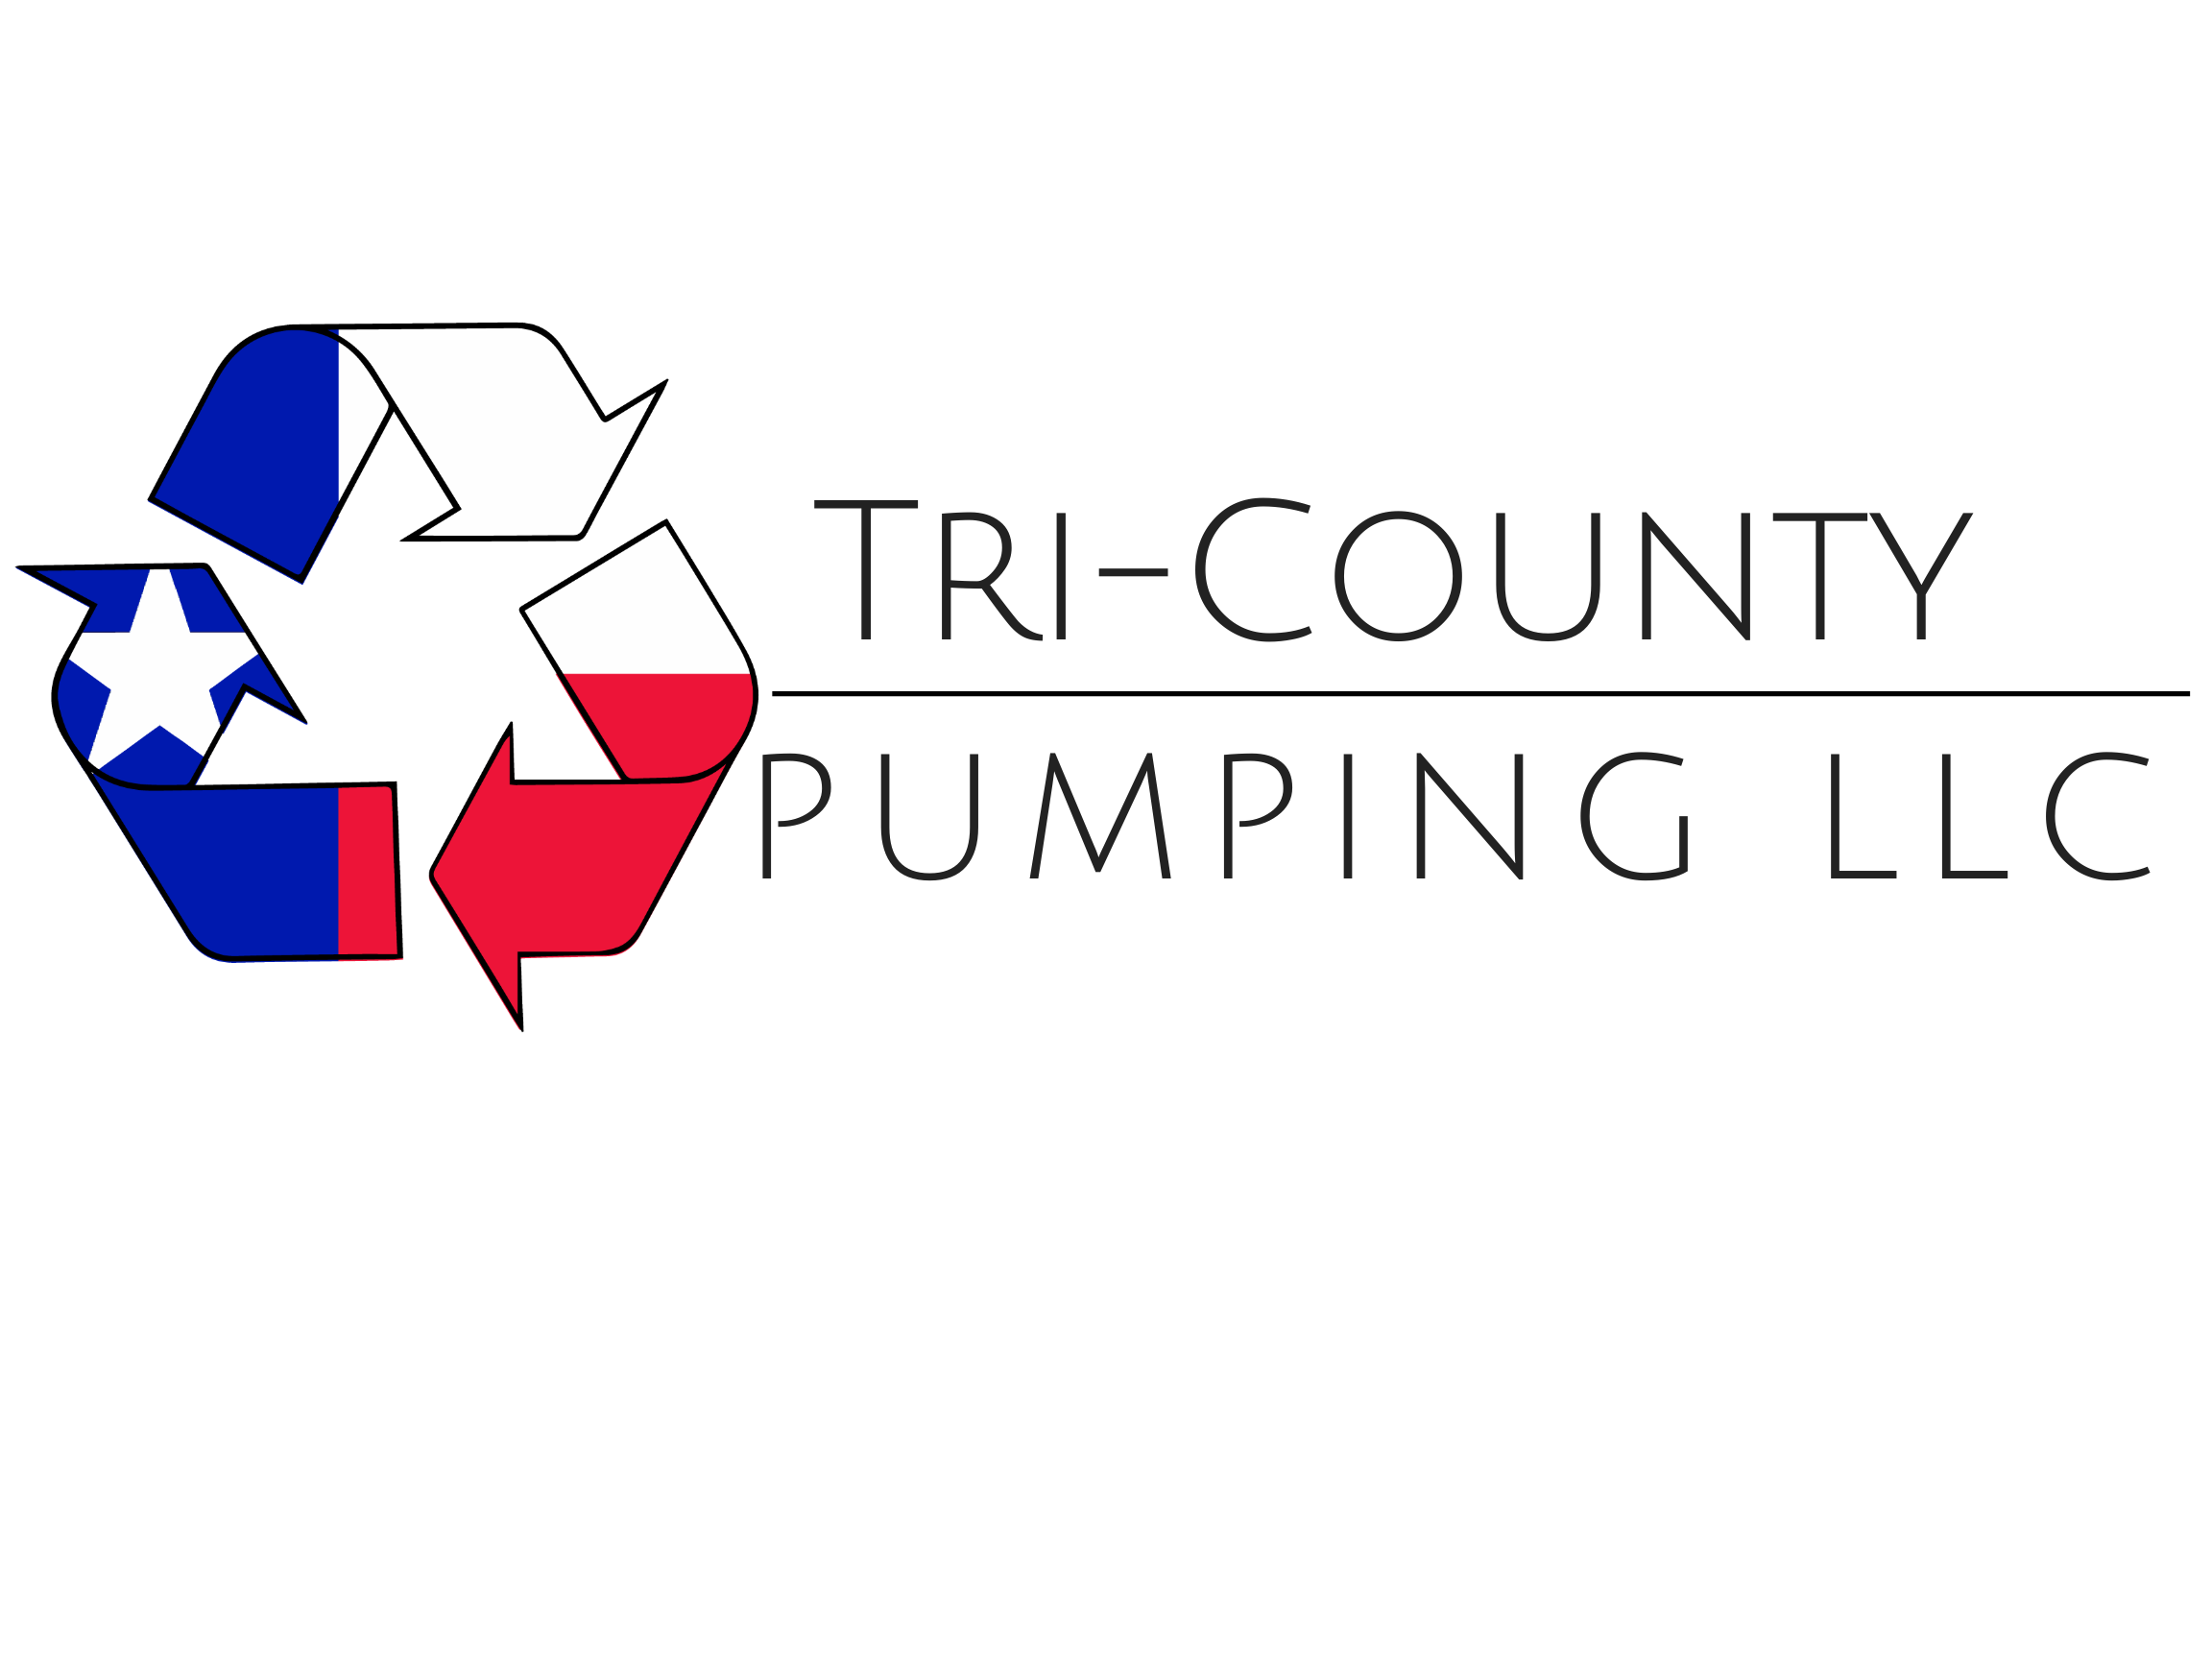 Tri-County Pumping LLC